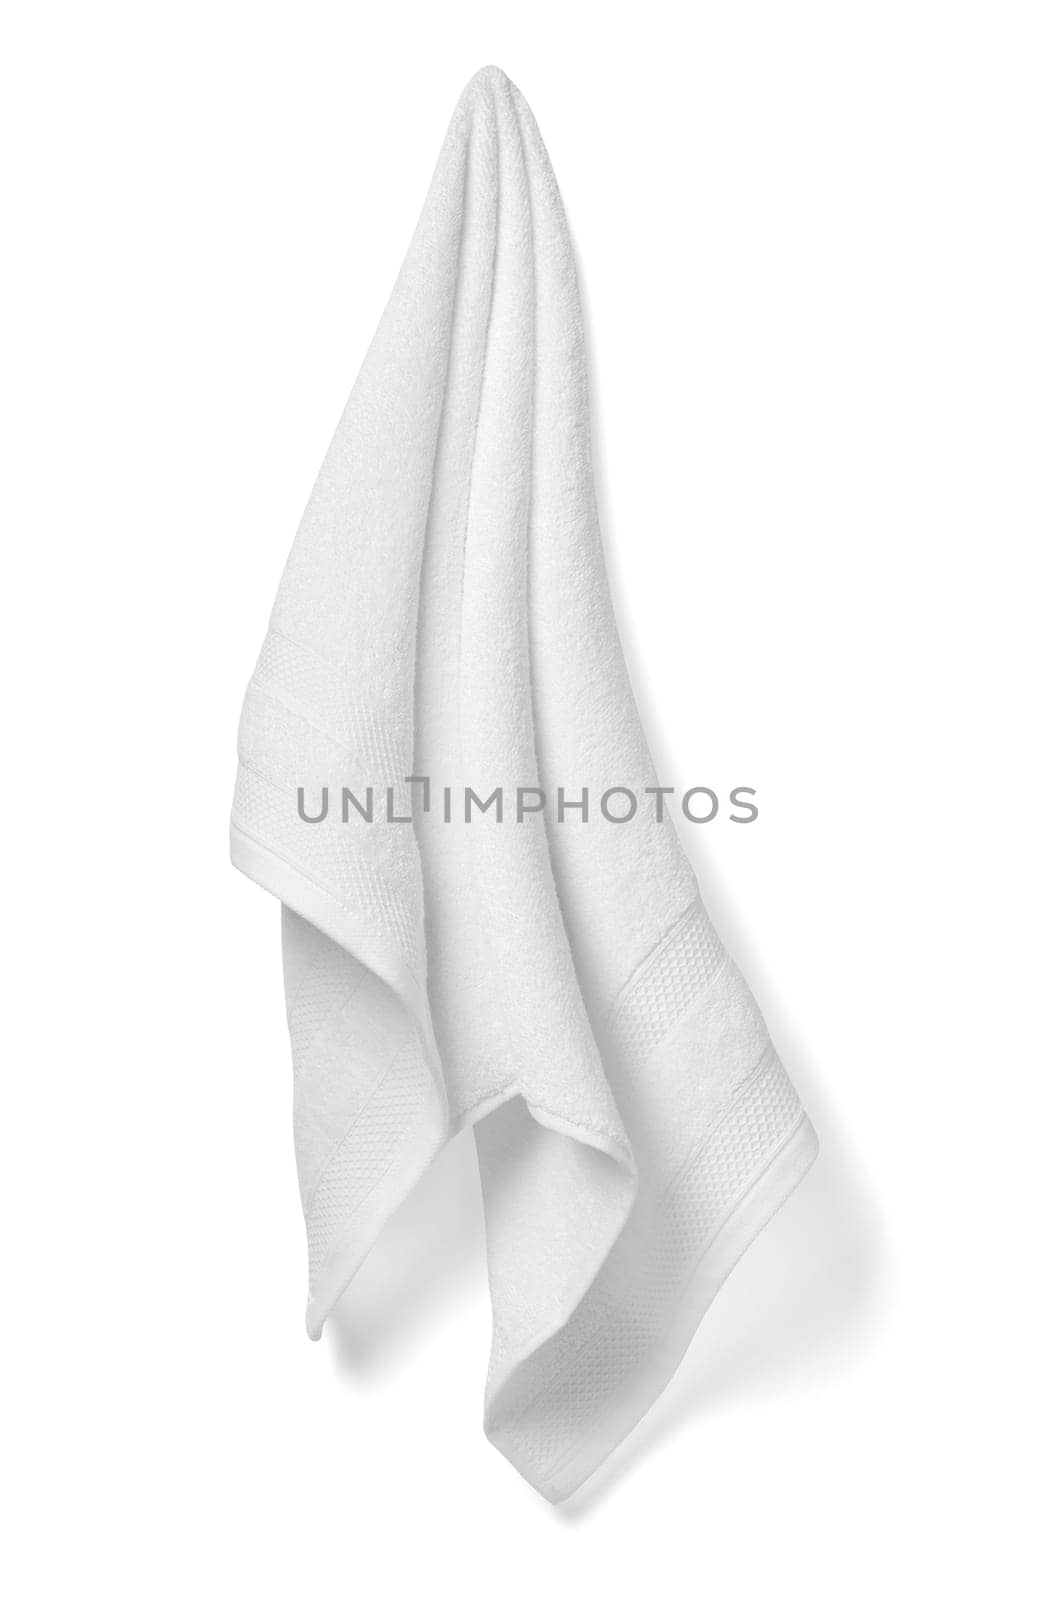 towel cotton bathroom white spa cloth textile by Picsfive